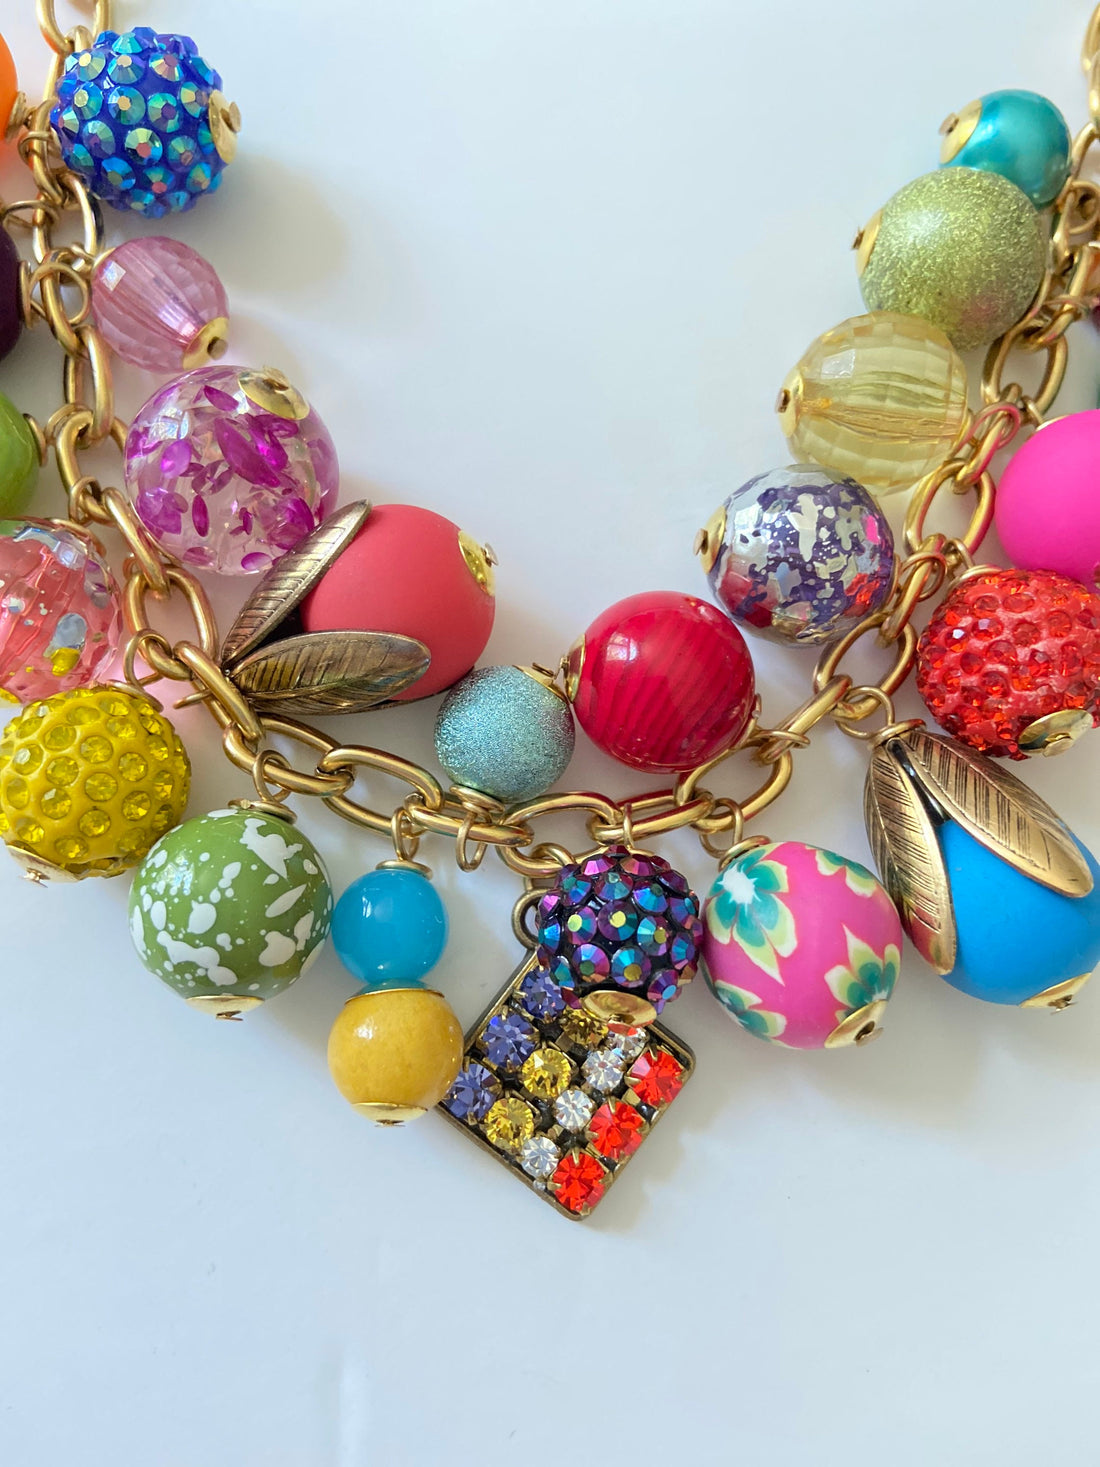 Lenora Dame Rainbow Charm Necklace